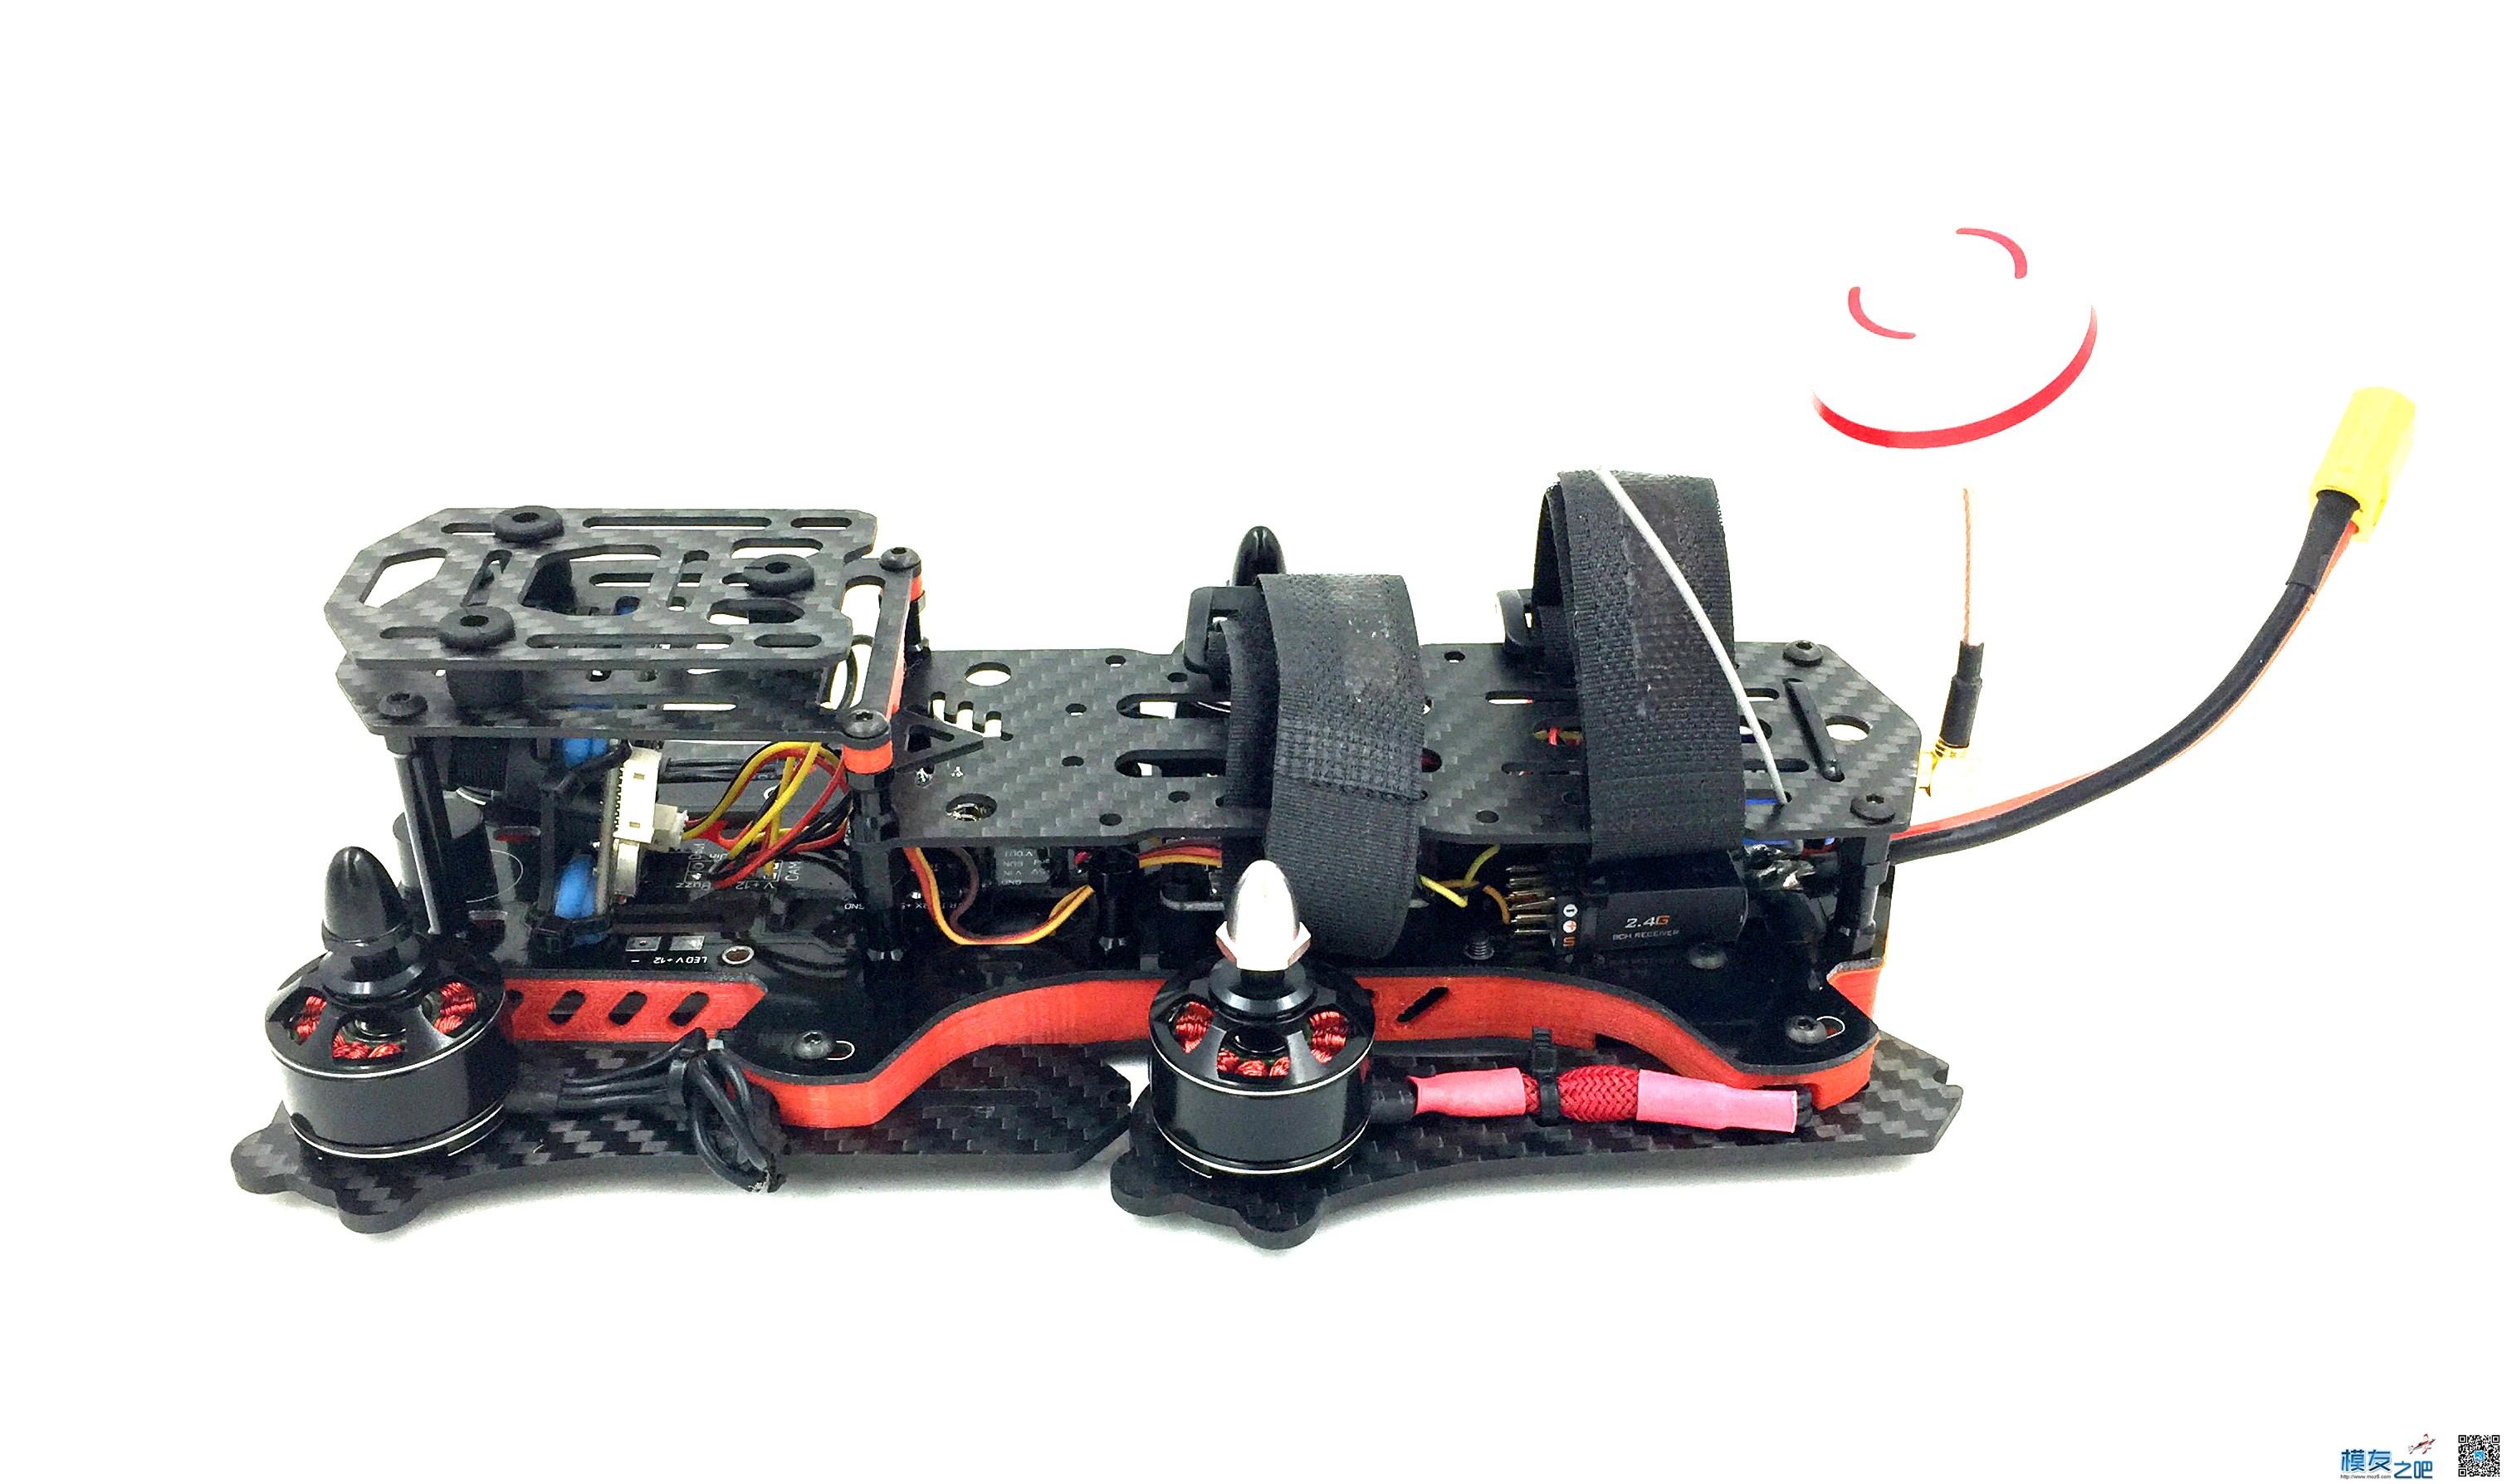 GE-FPV GE280Z  可折叠 集成线路机身板 3D打印件美化定妆照 穿越机,电池,云台,飞控,电调 作者:GE-FPV 6653 